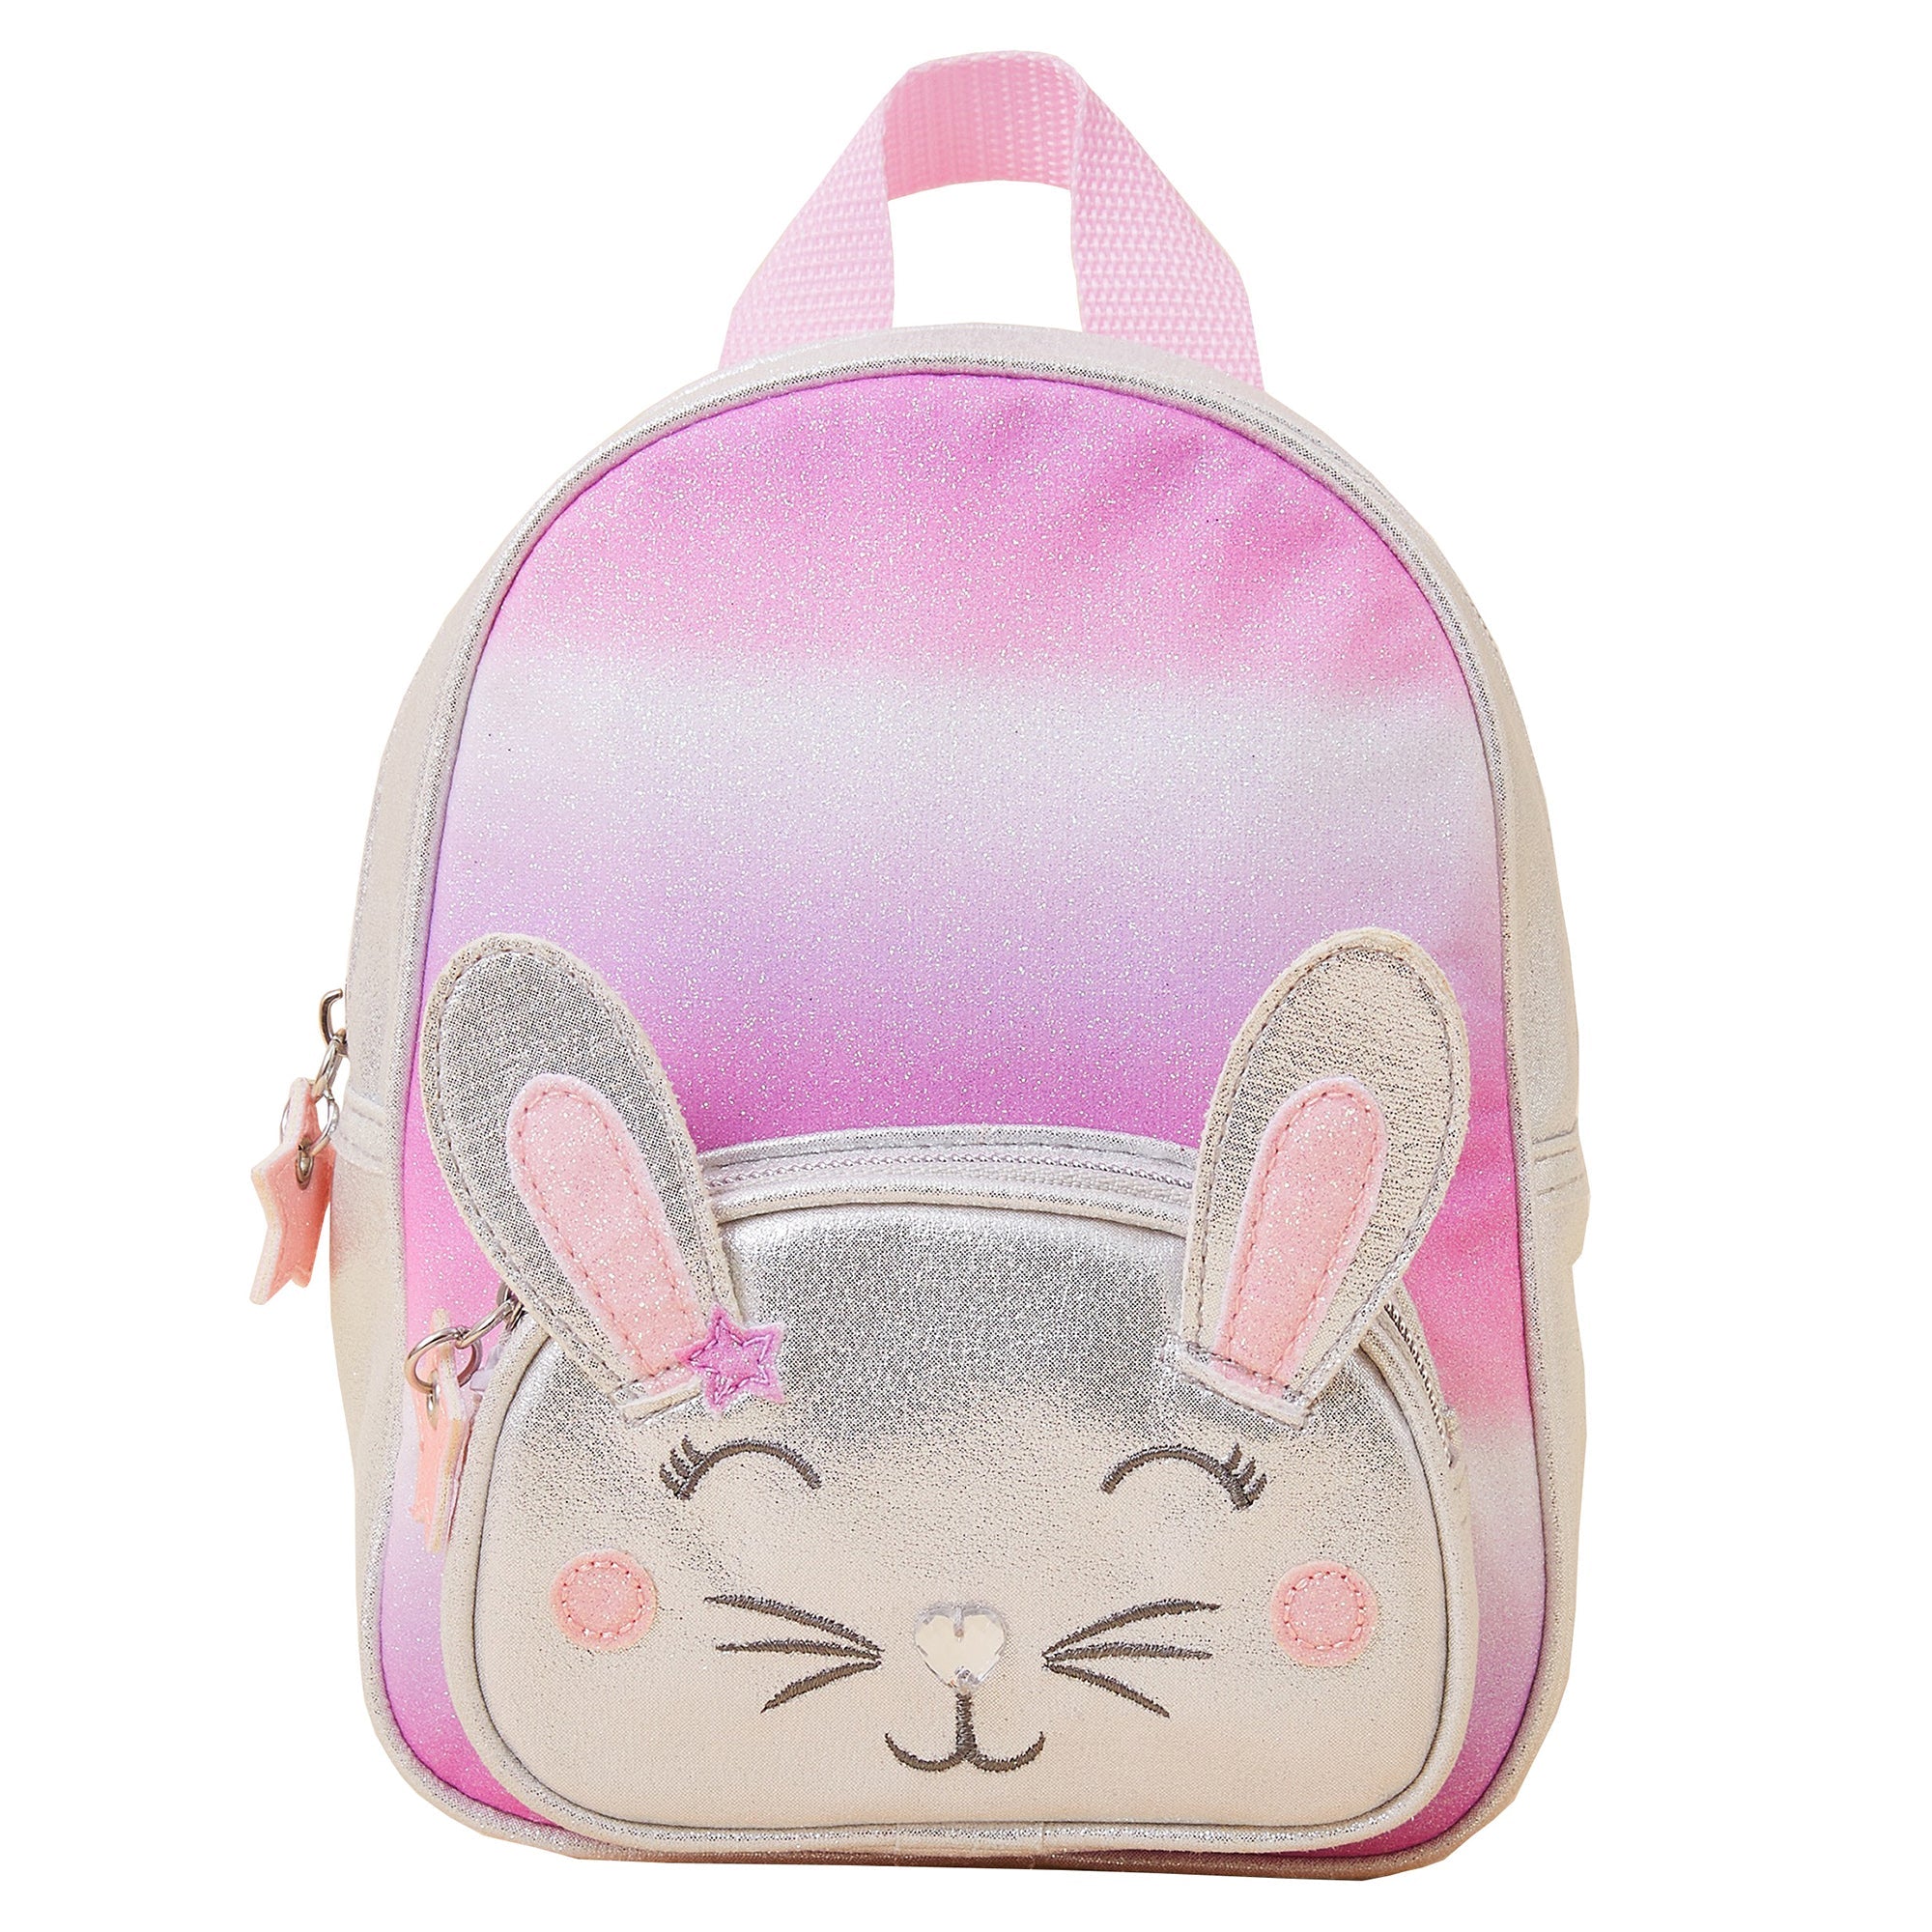 Accessorize London Girl's Rabbit Backpack